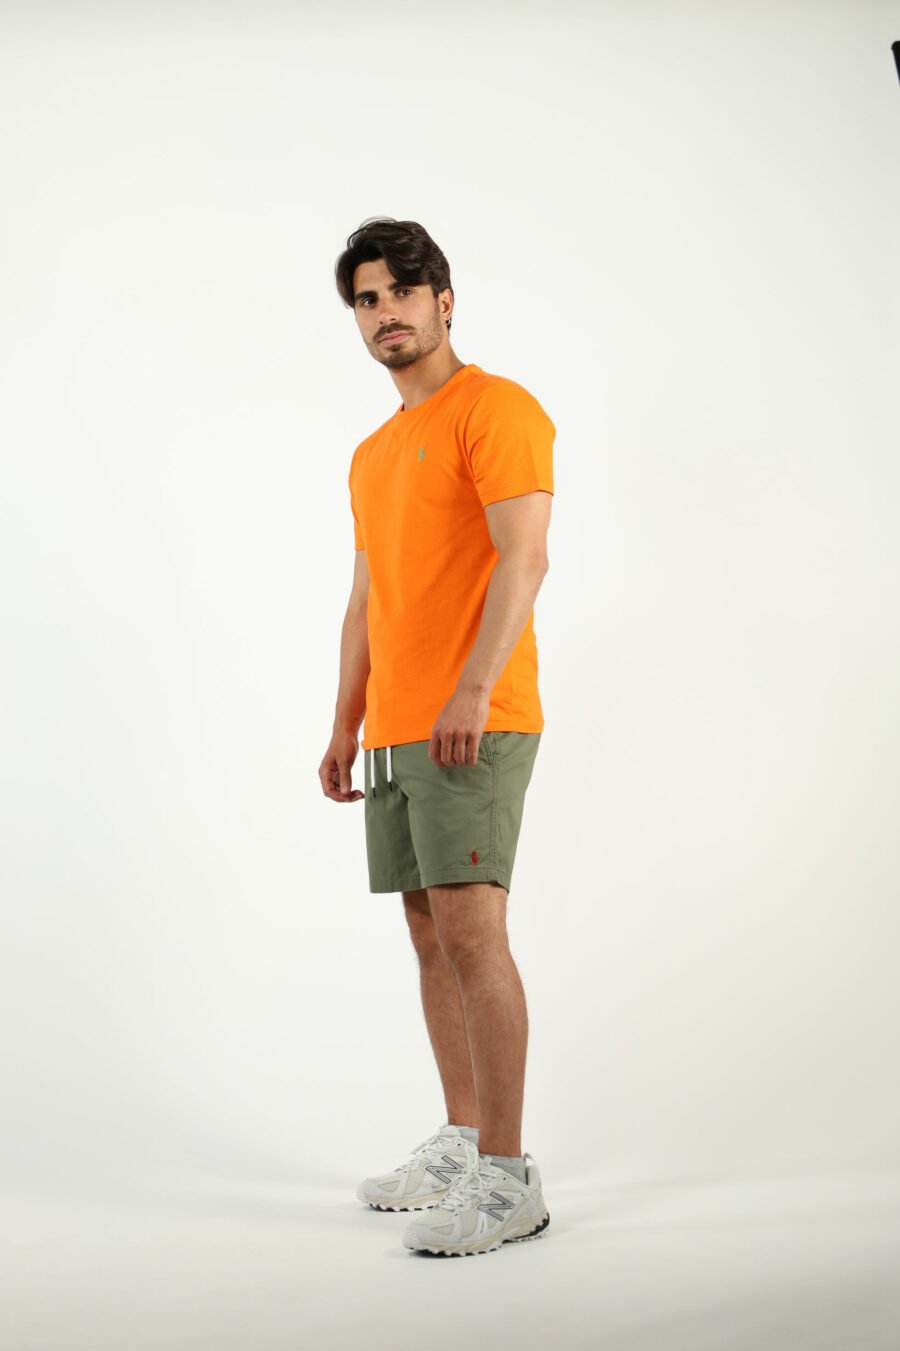 Camiseta naranja y verde con minilogo "polo" - number14000